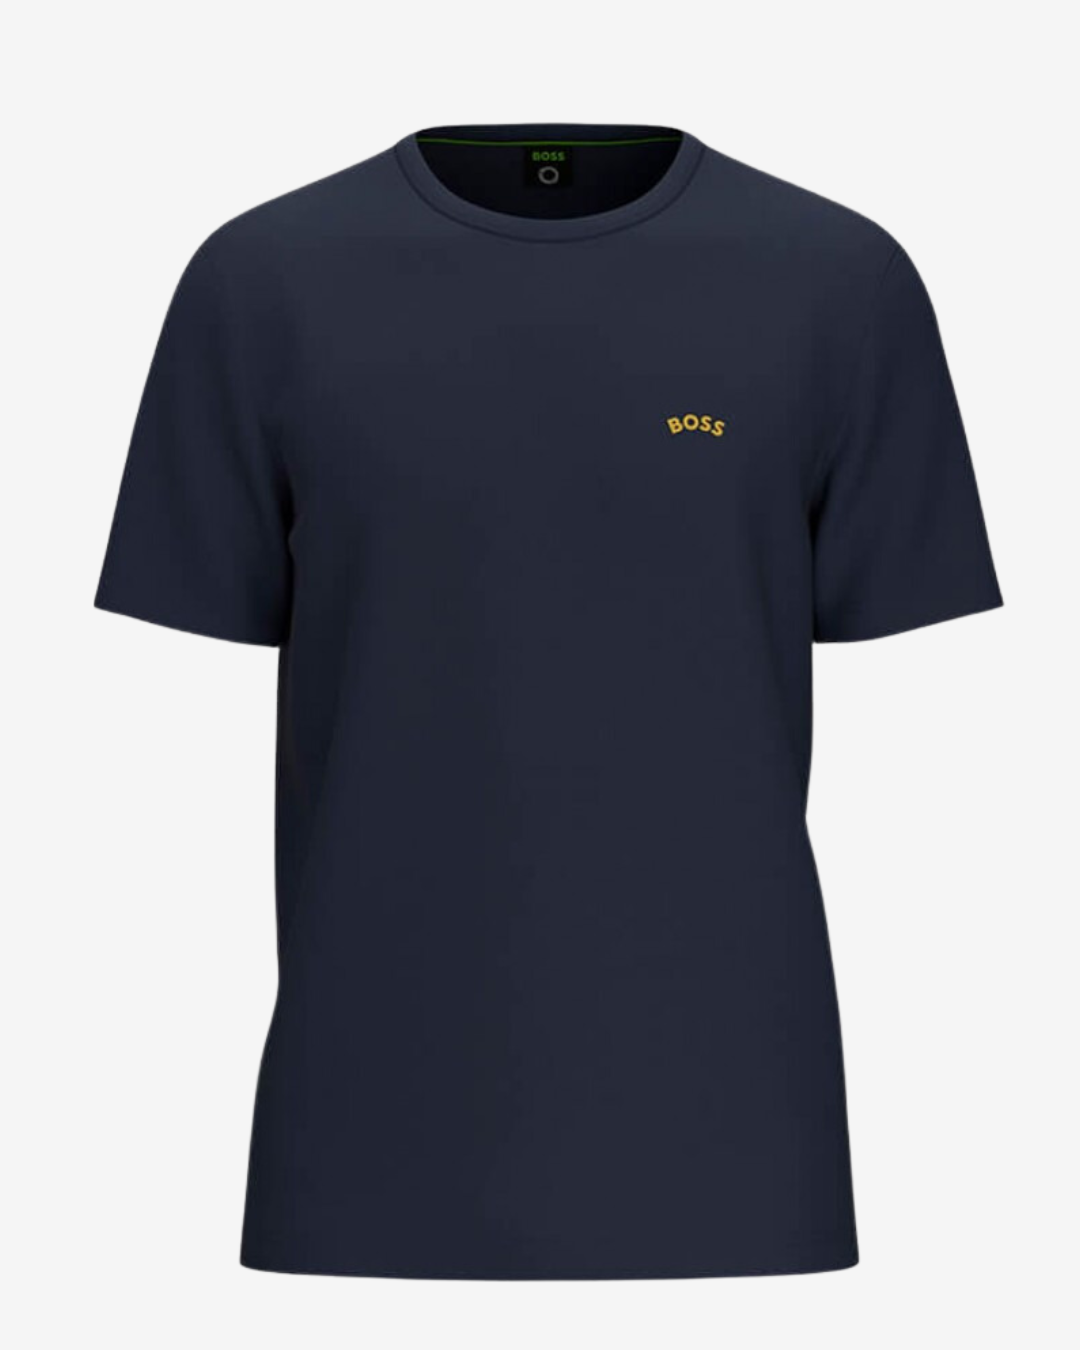 Se Hugo Boss Curved logo t-shirt - Navy / Guld - Str. S - Modish.dk hos Modish.dk